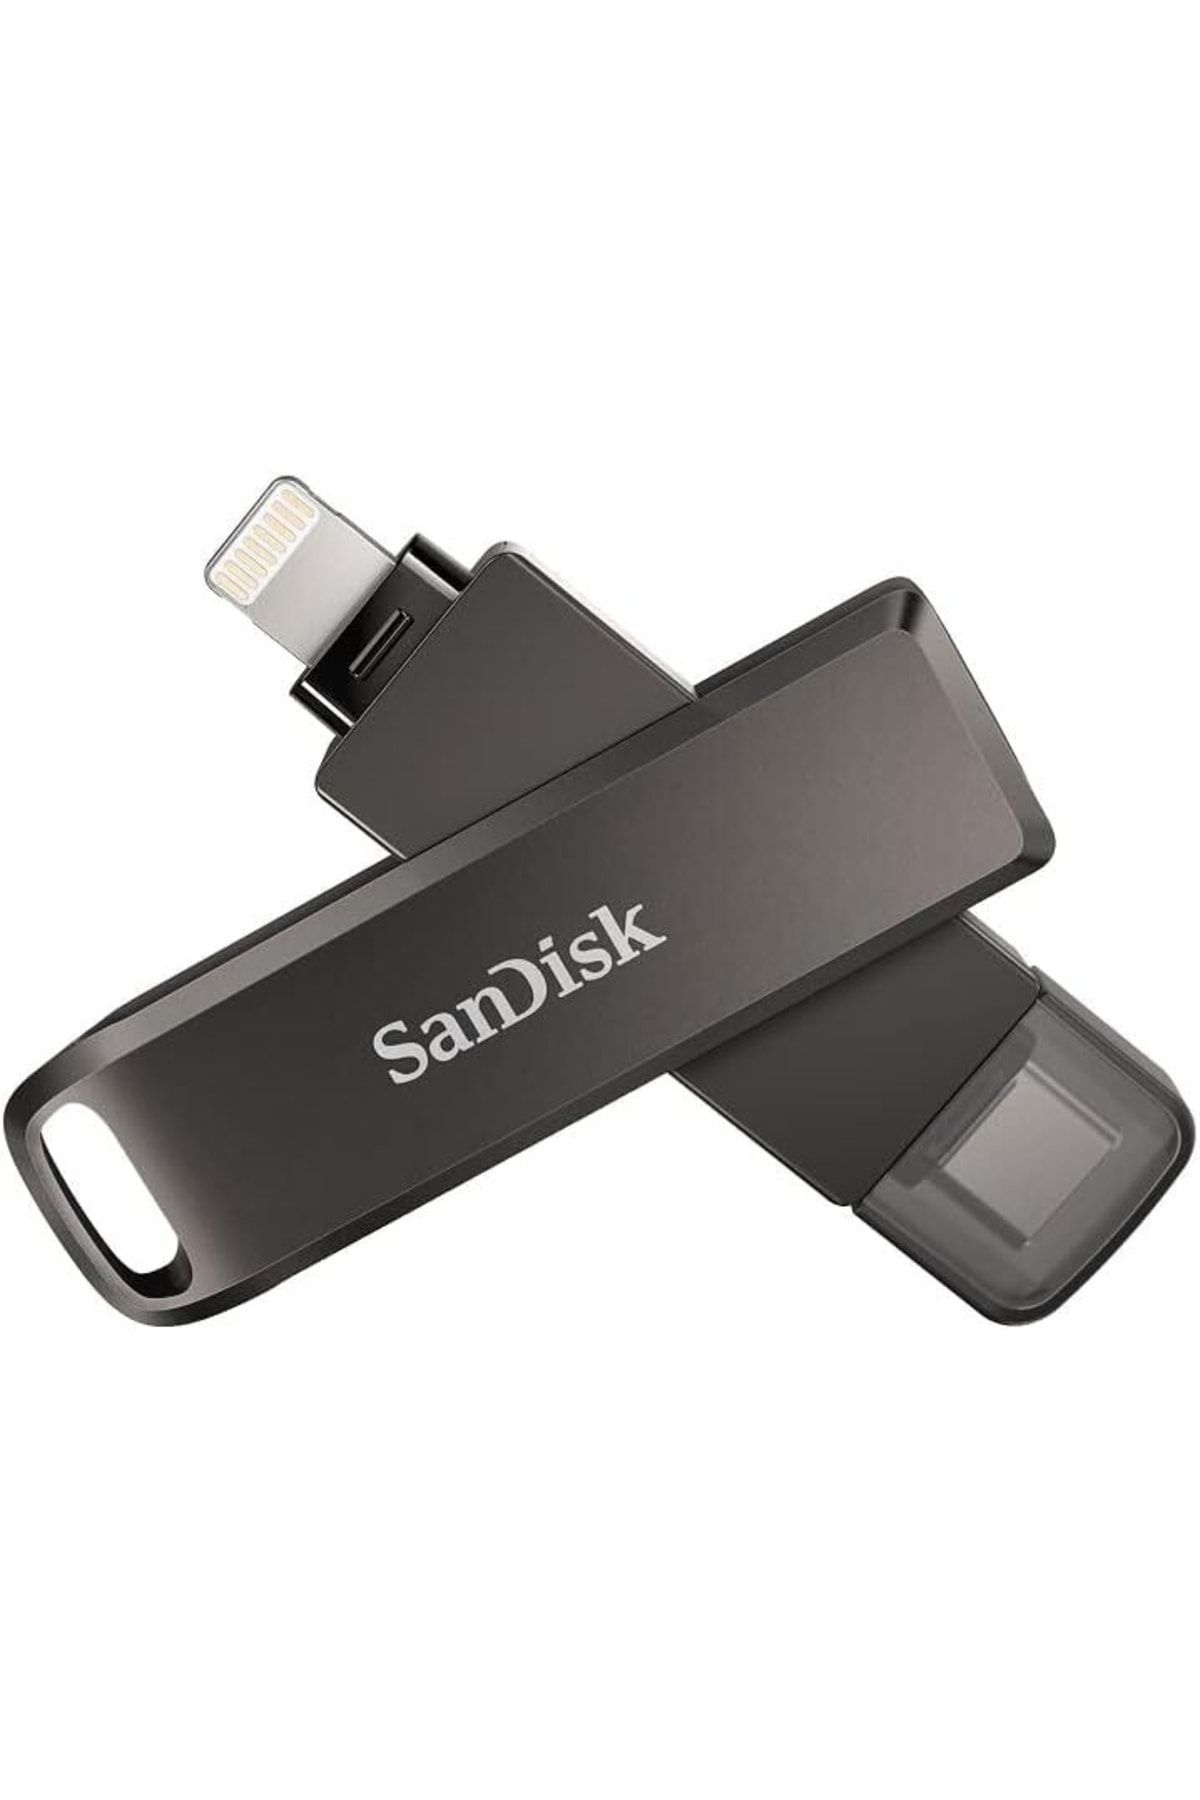 Sandisk iXpand Luxe IOS Android 64GB USB Flash Bellek SDIX70N-064G-GN6NN